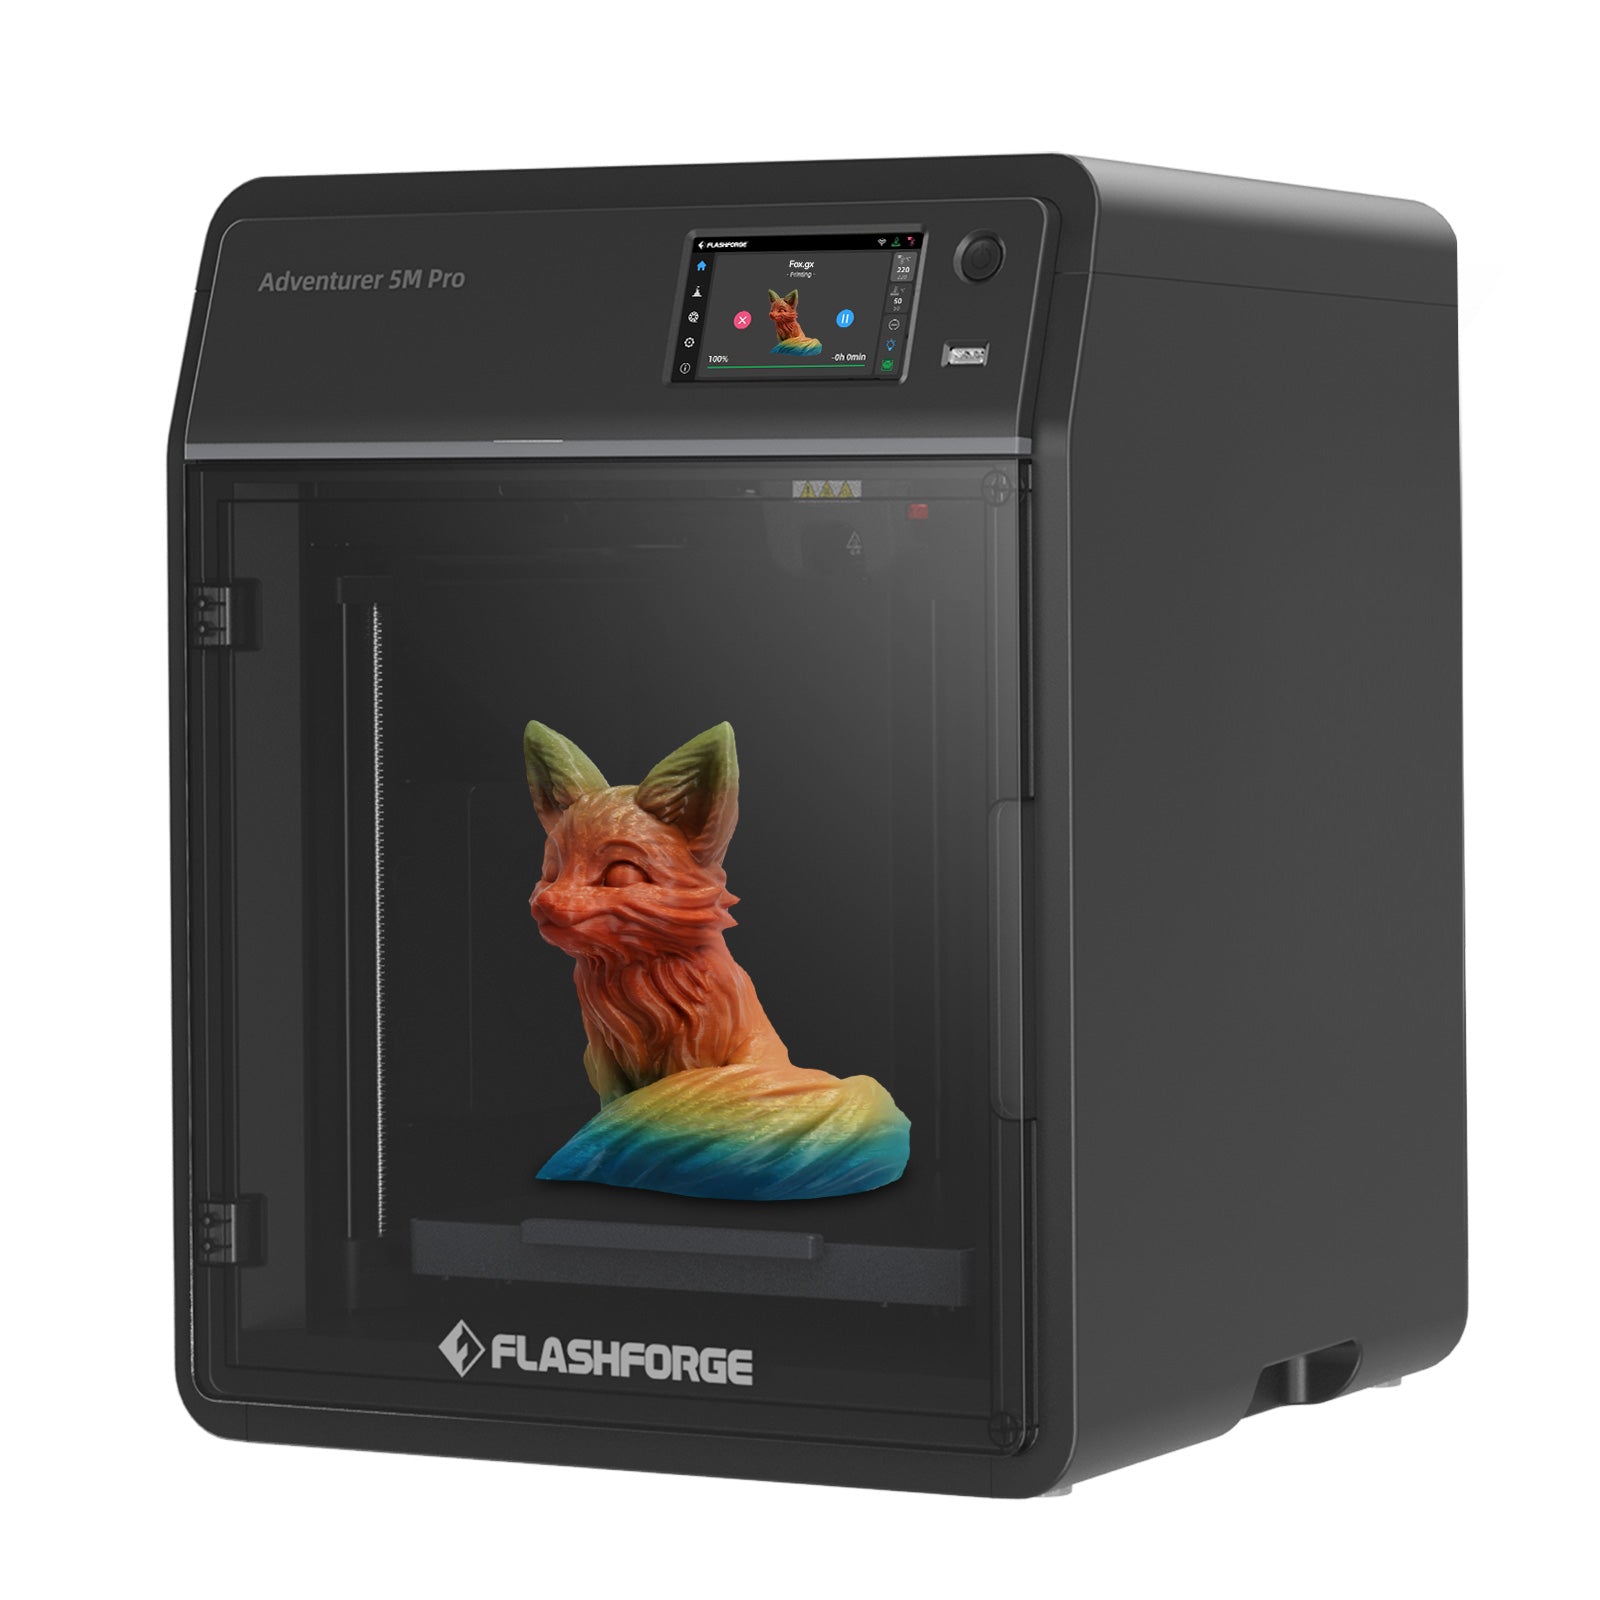 Flashforge Adventurer 5M Pro 3D Printer Large Image